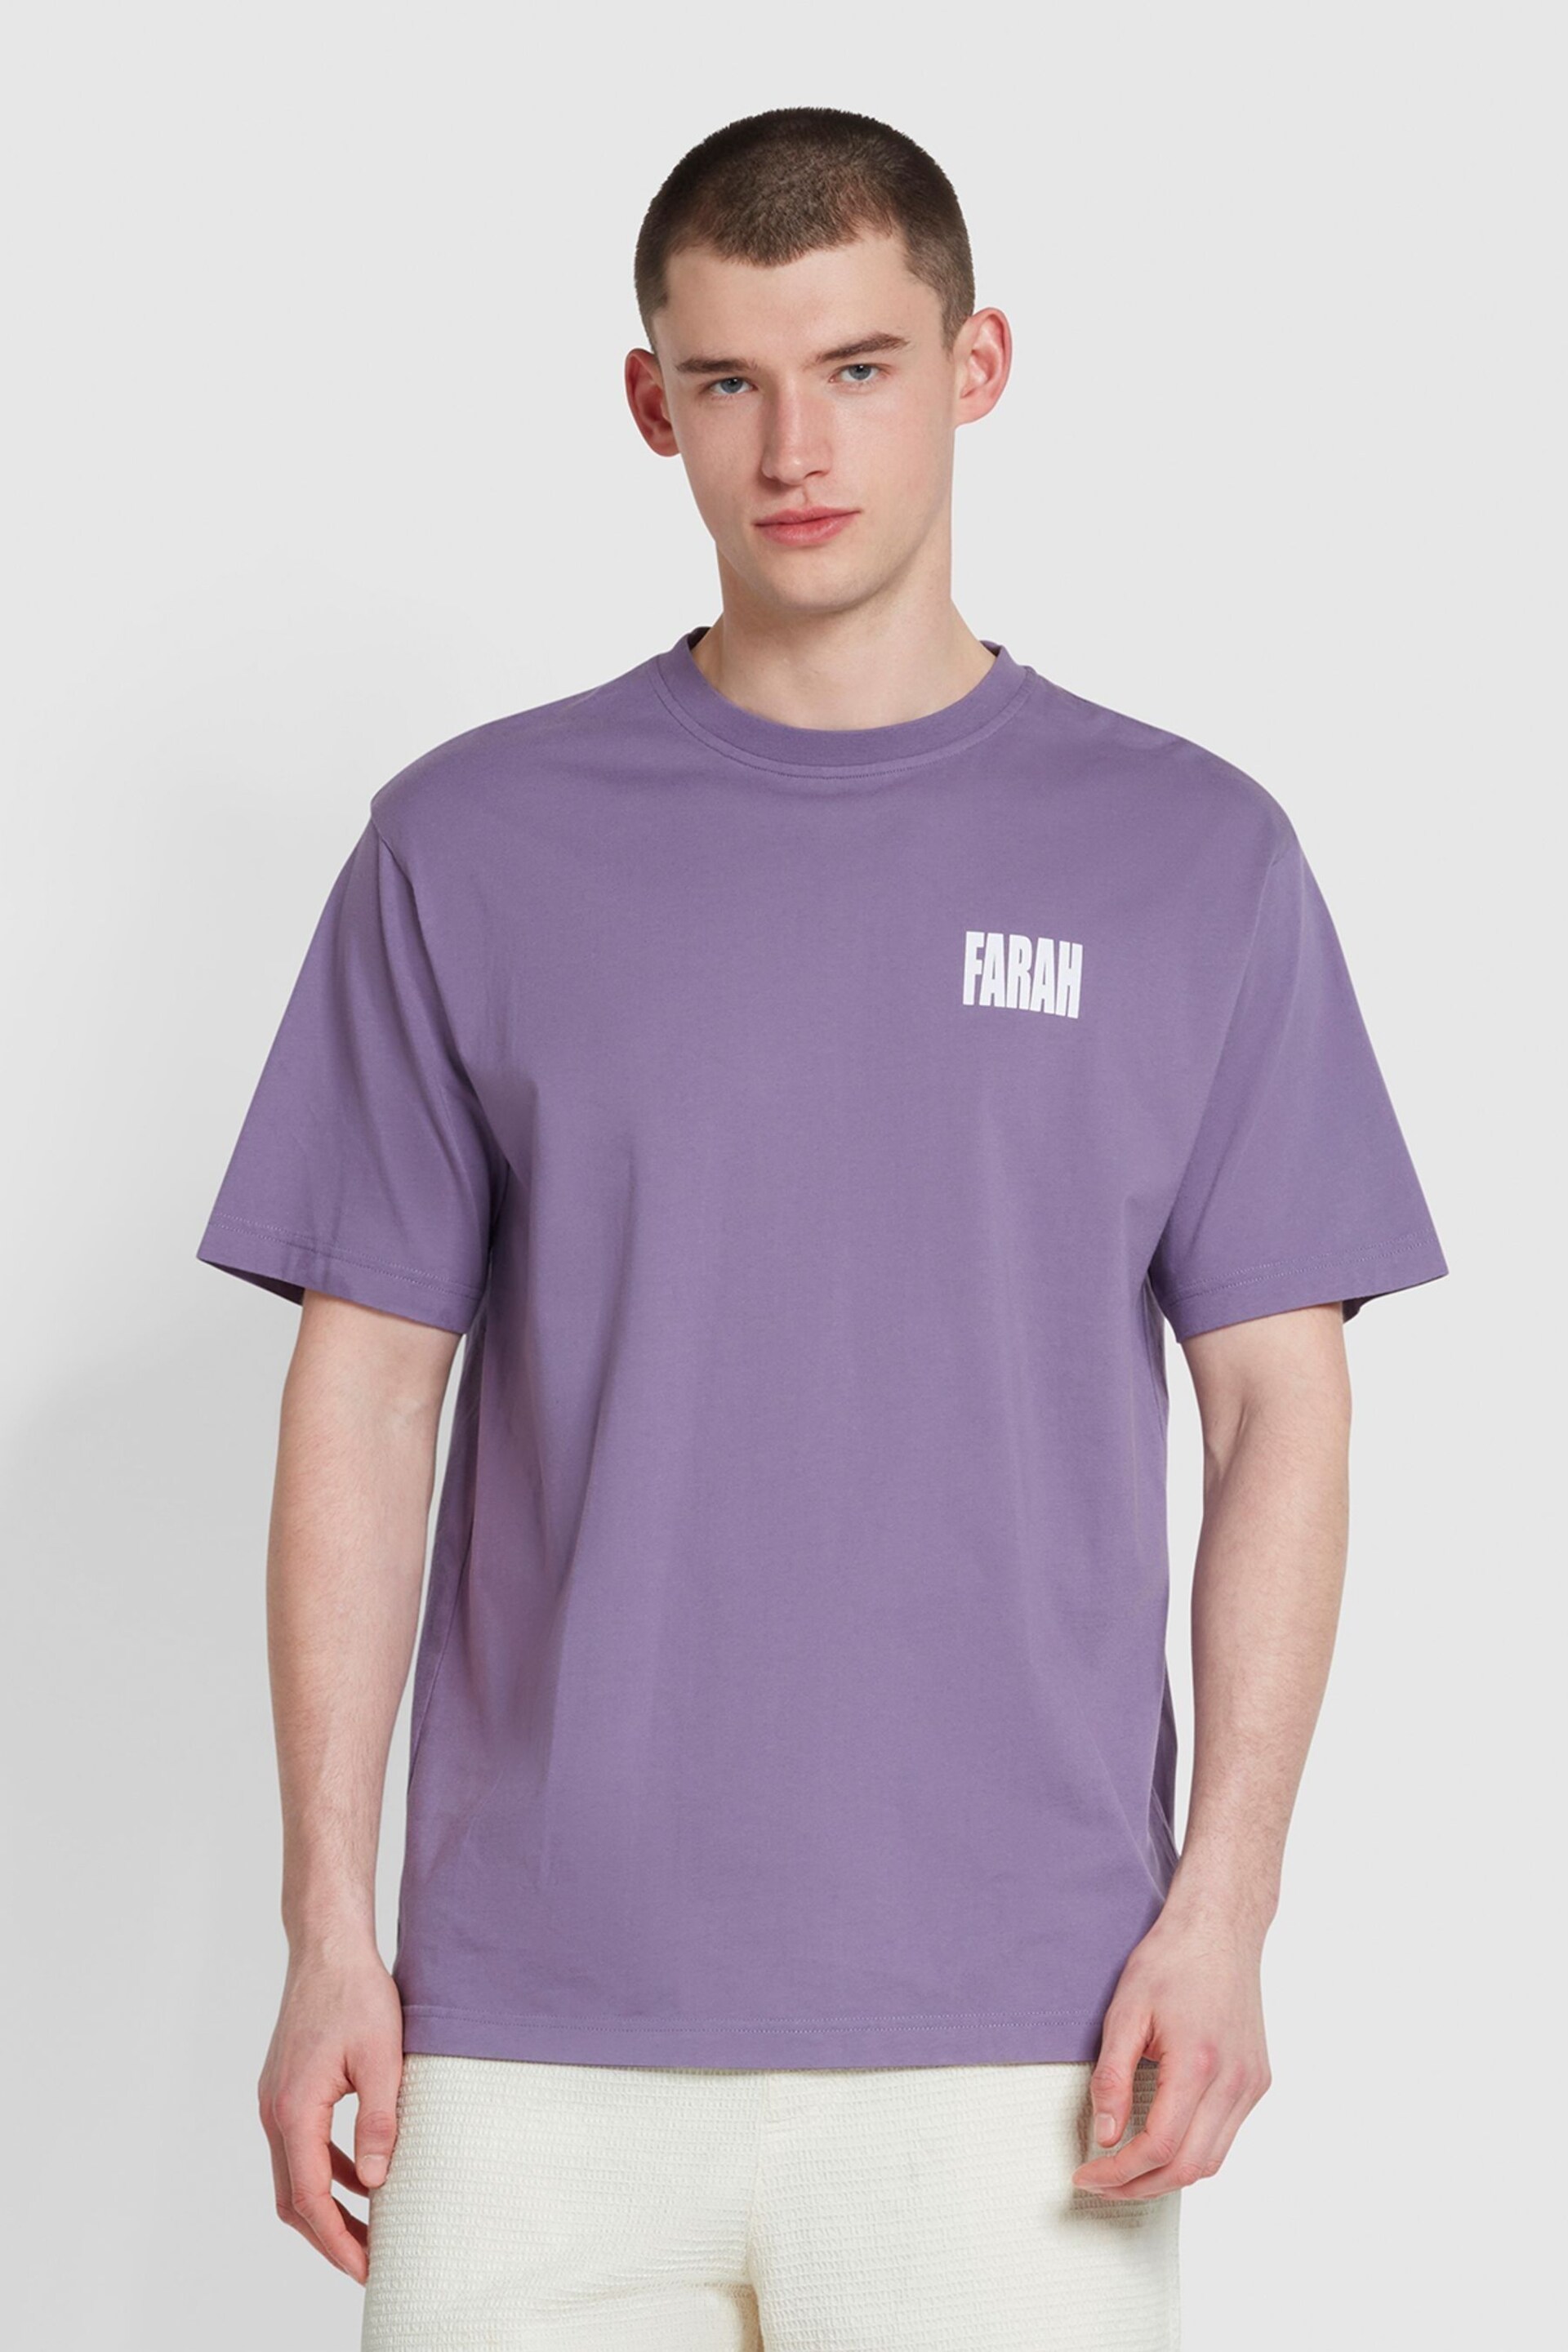 Farah Purple Damon Graphic T-Shirt - Image 1 of 1